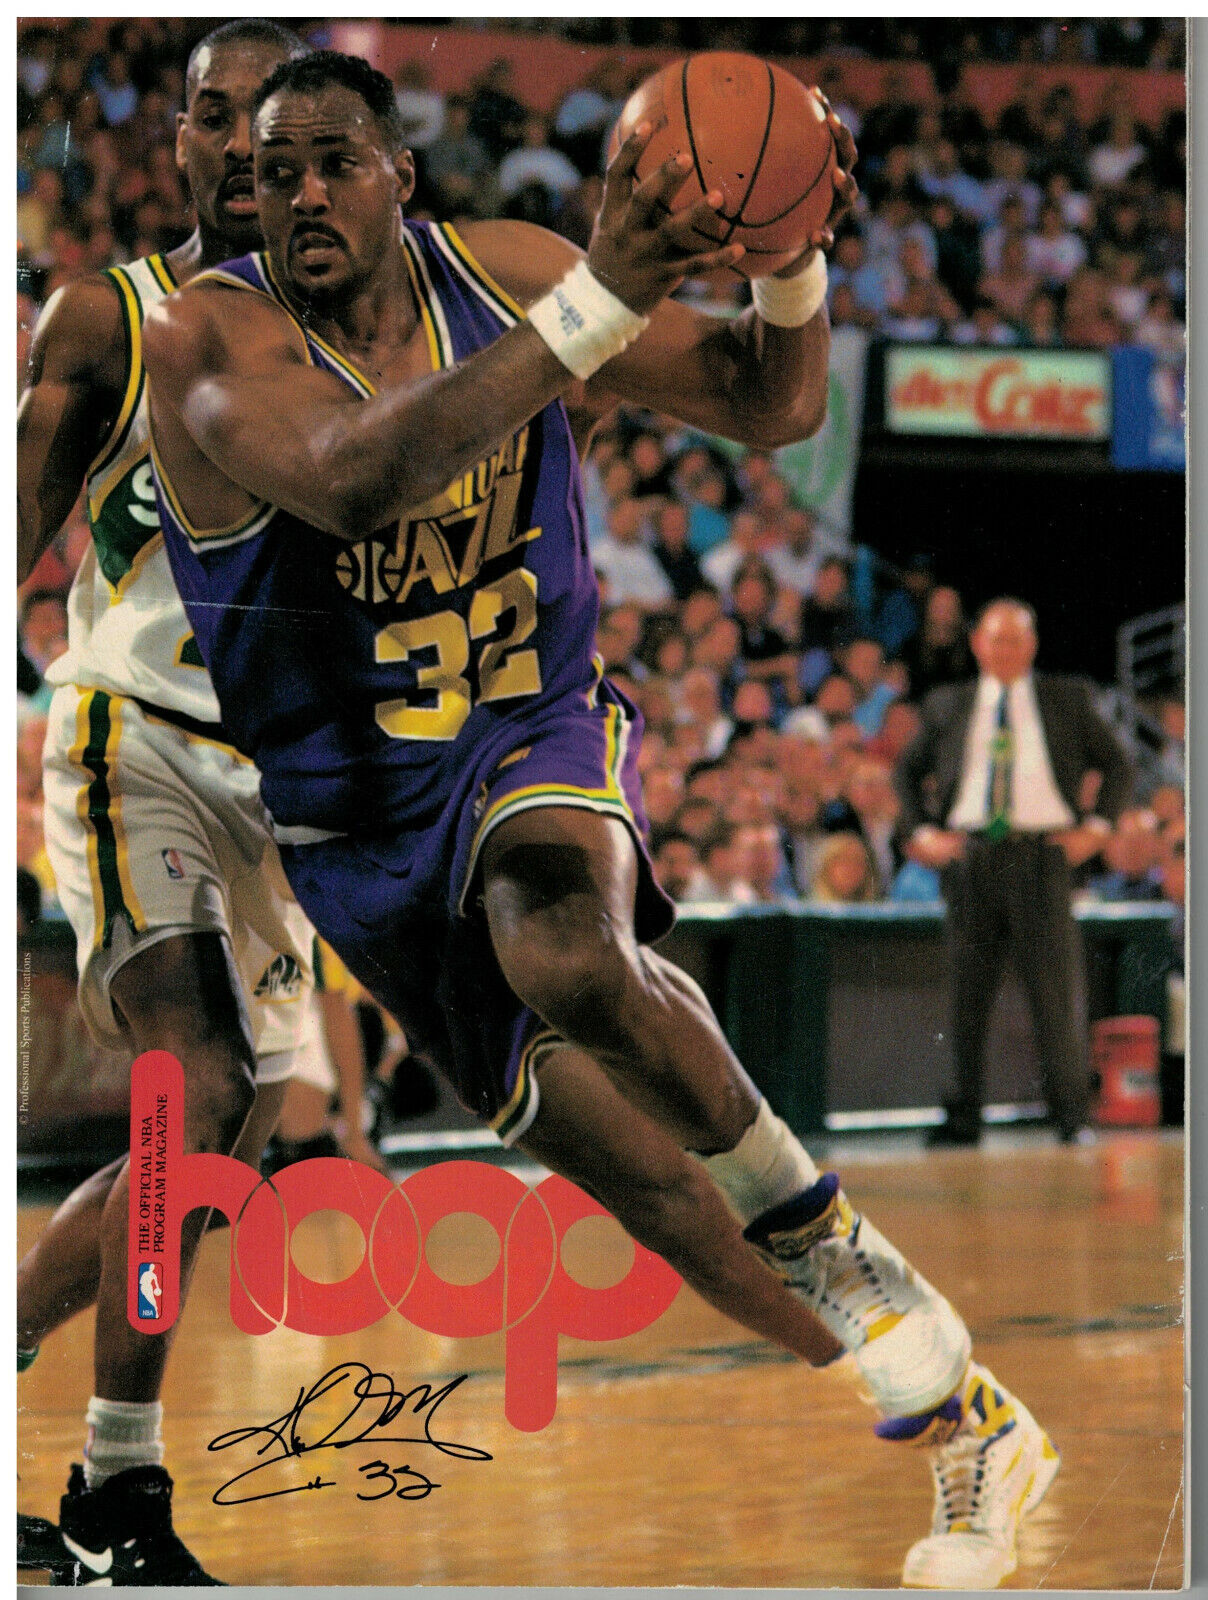 1993/94 Milwaukee Bucks Official Program Hoop Karl malone Cover